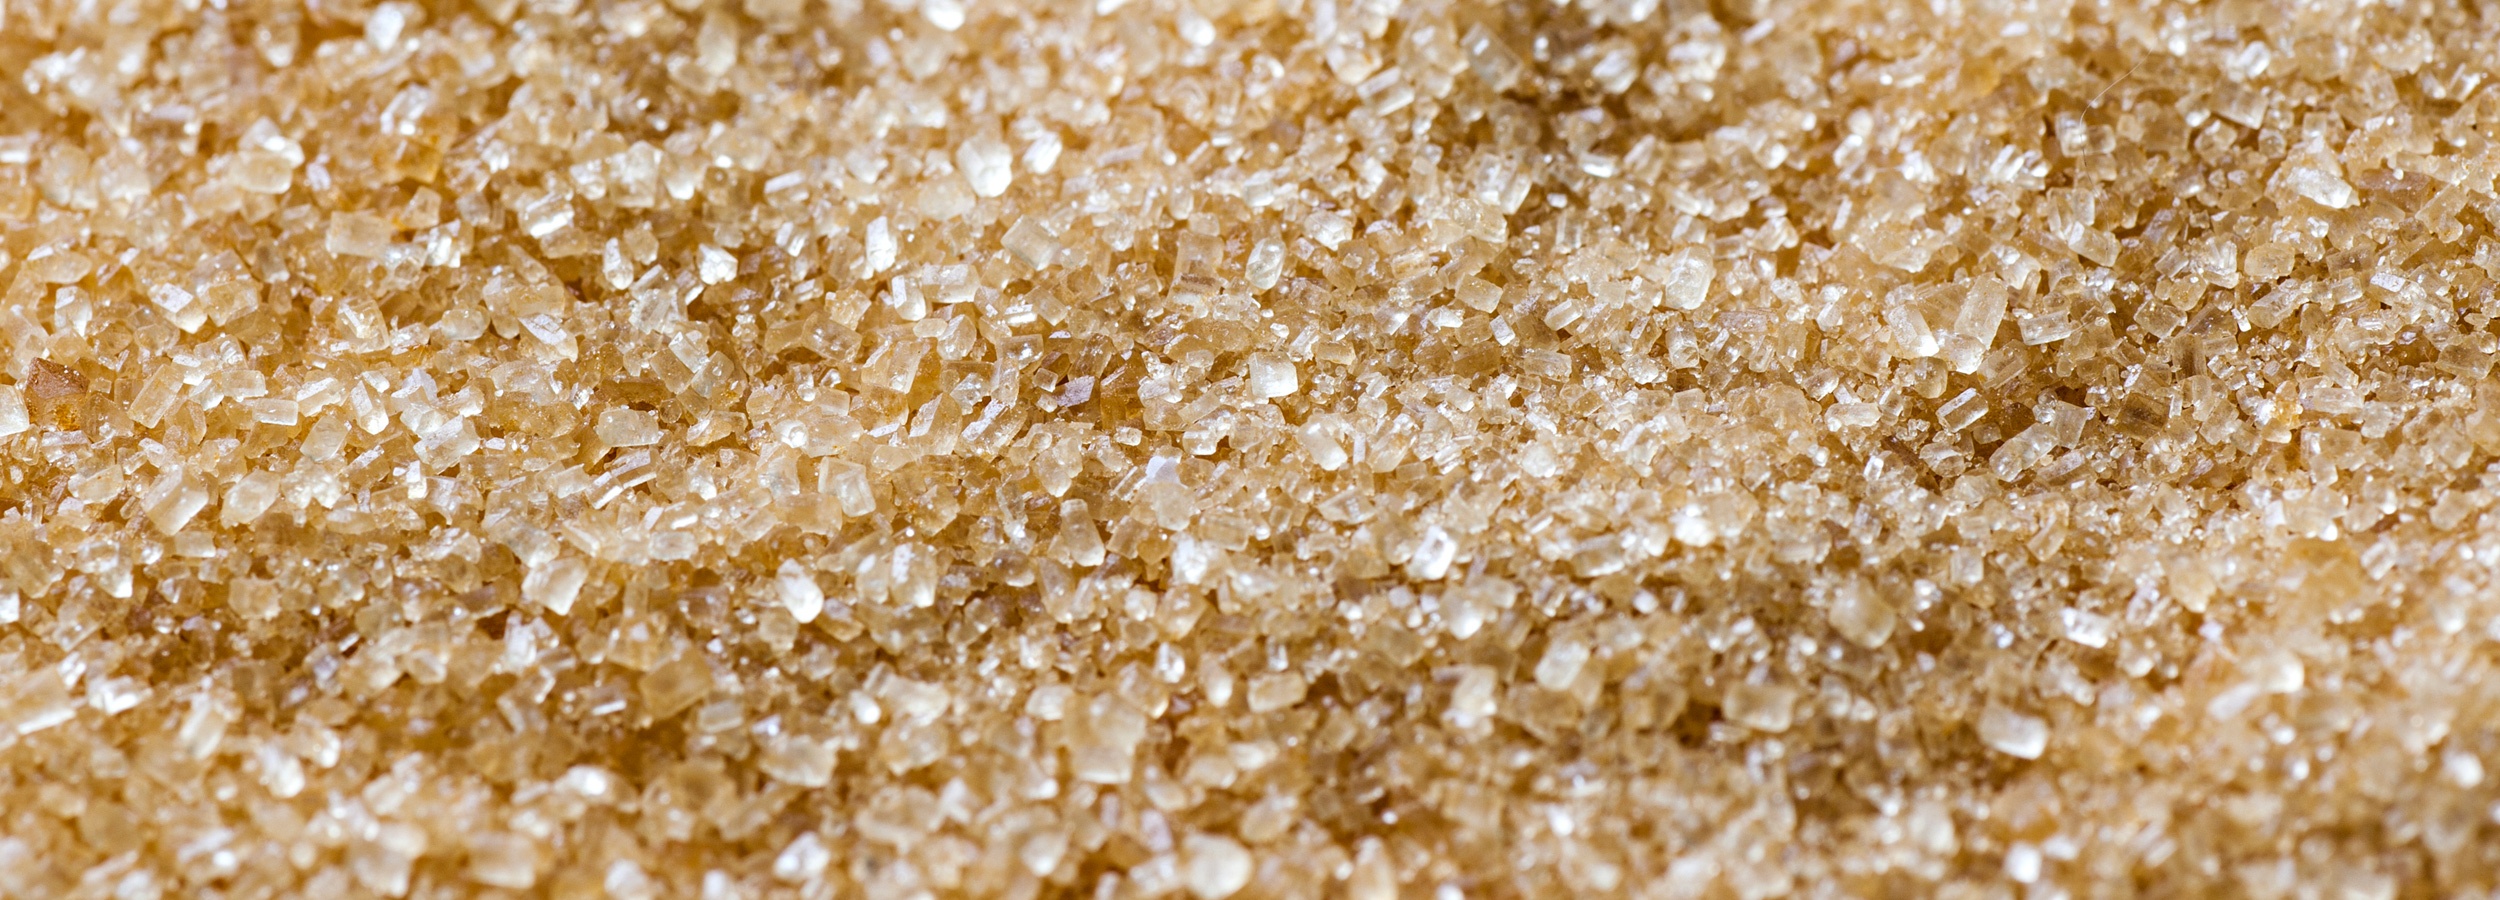 Image of brown sugar